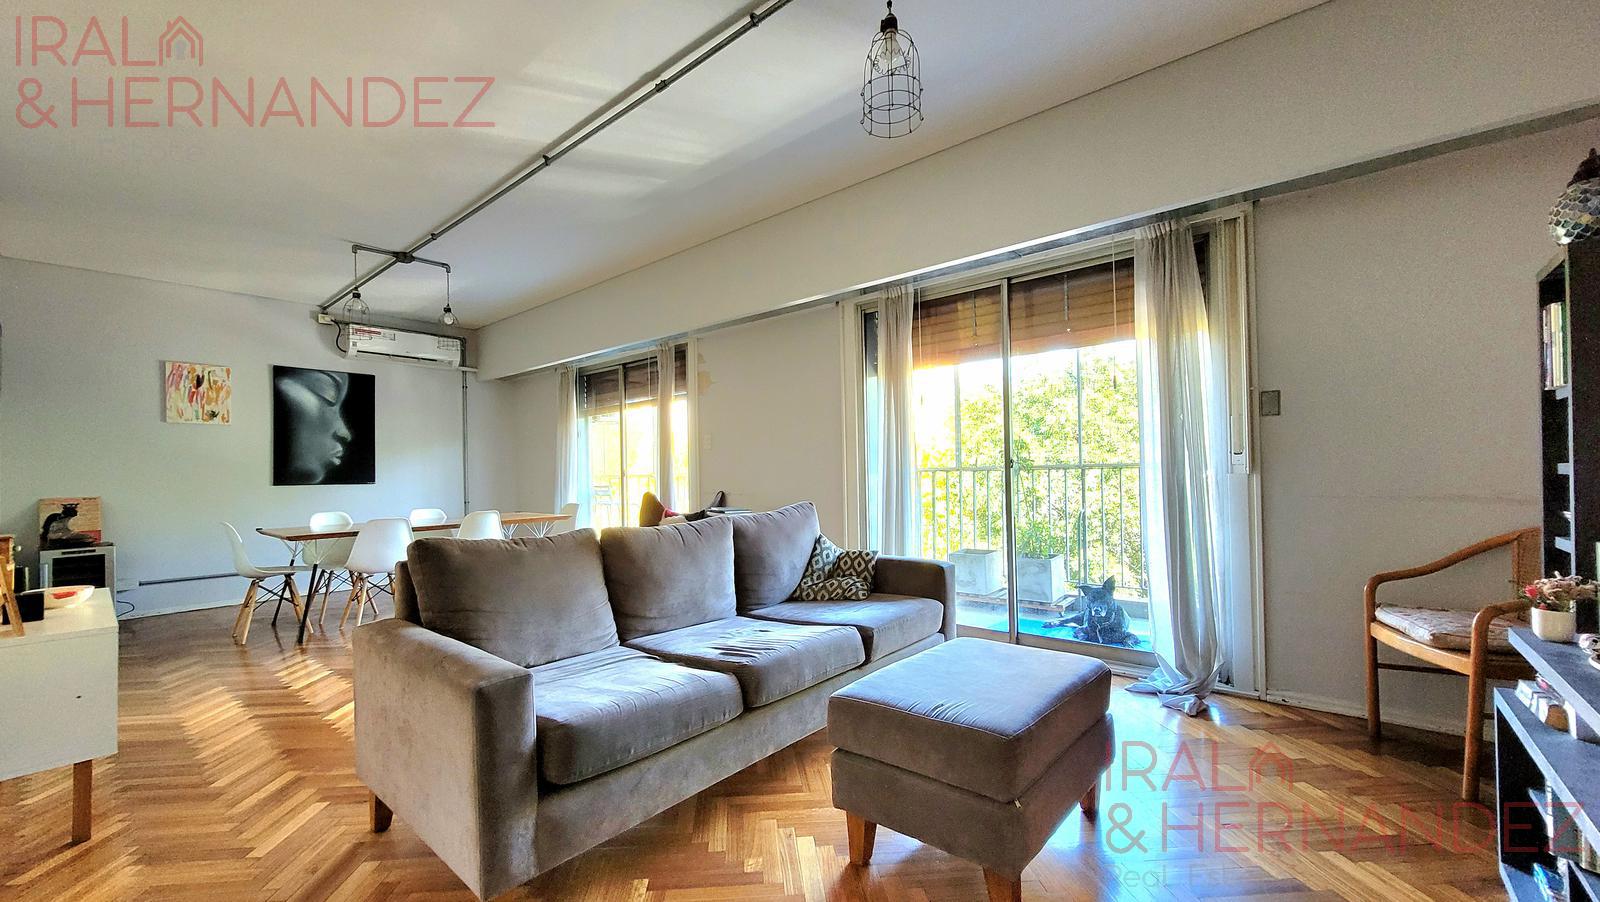 #5077772 | Sale | Apartment | Belgrano R (Irala & Hernandez Real Estate)